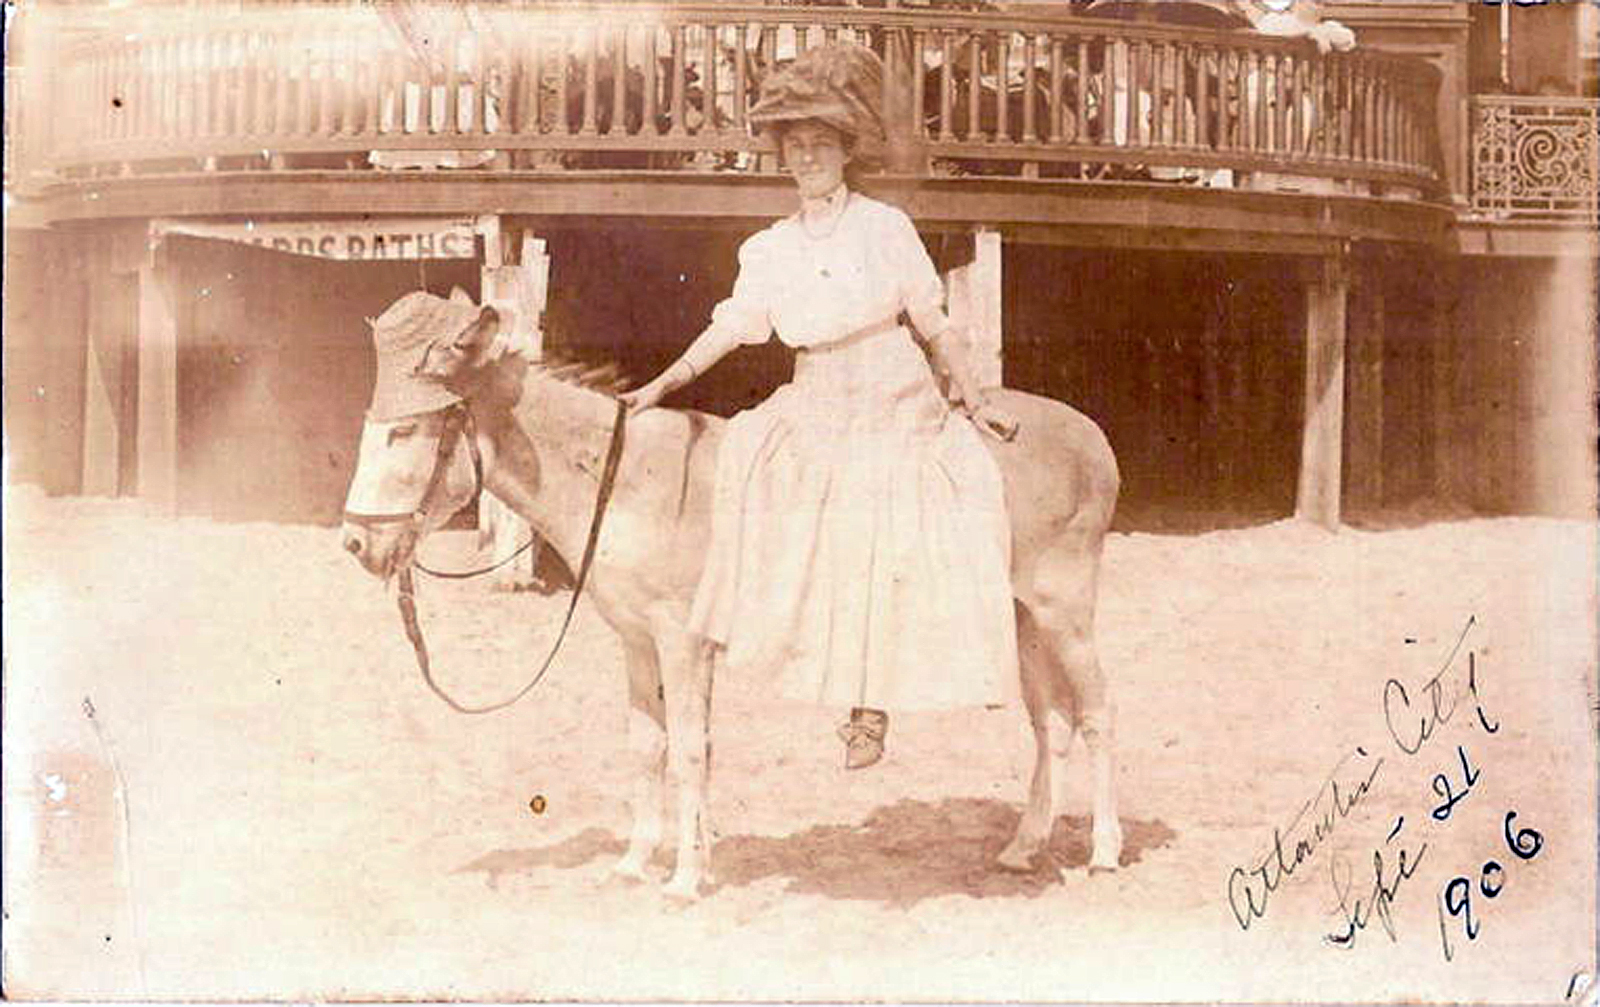 Atlantic City - Woman on a donkey - 1900s